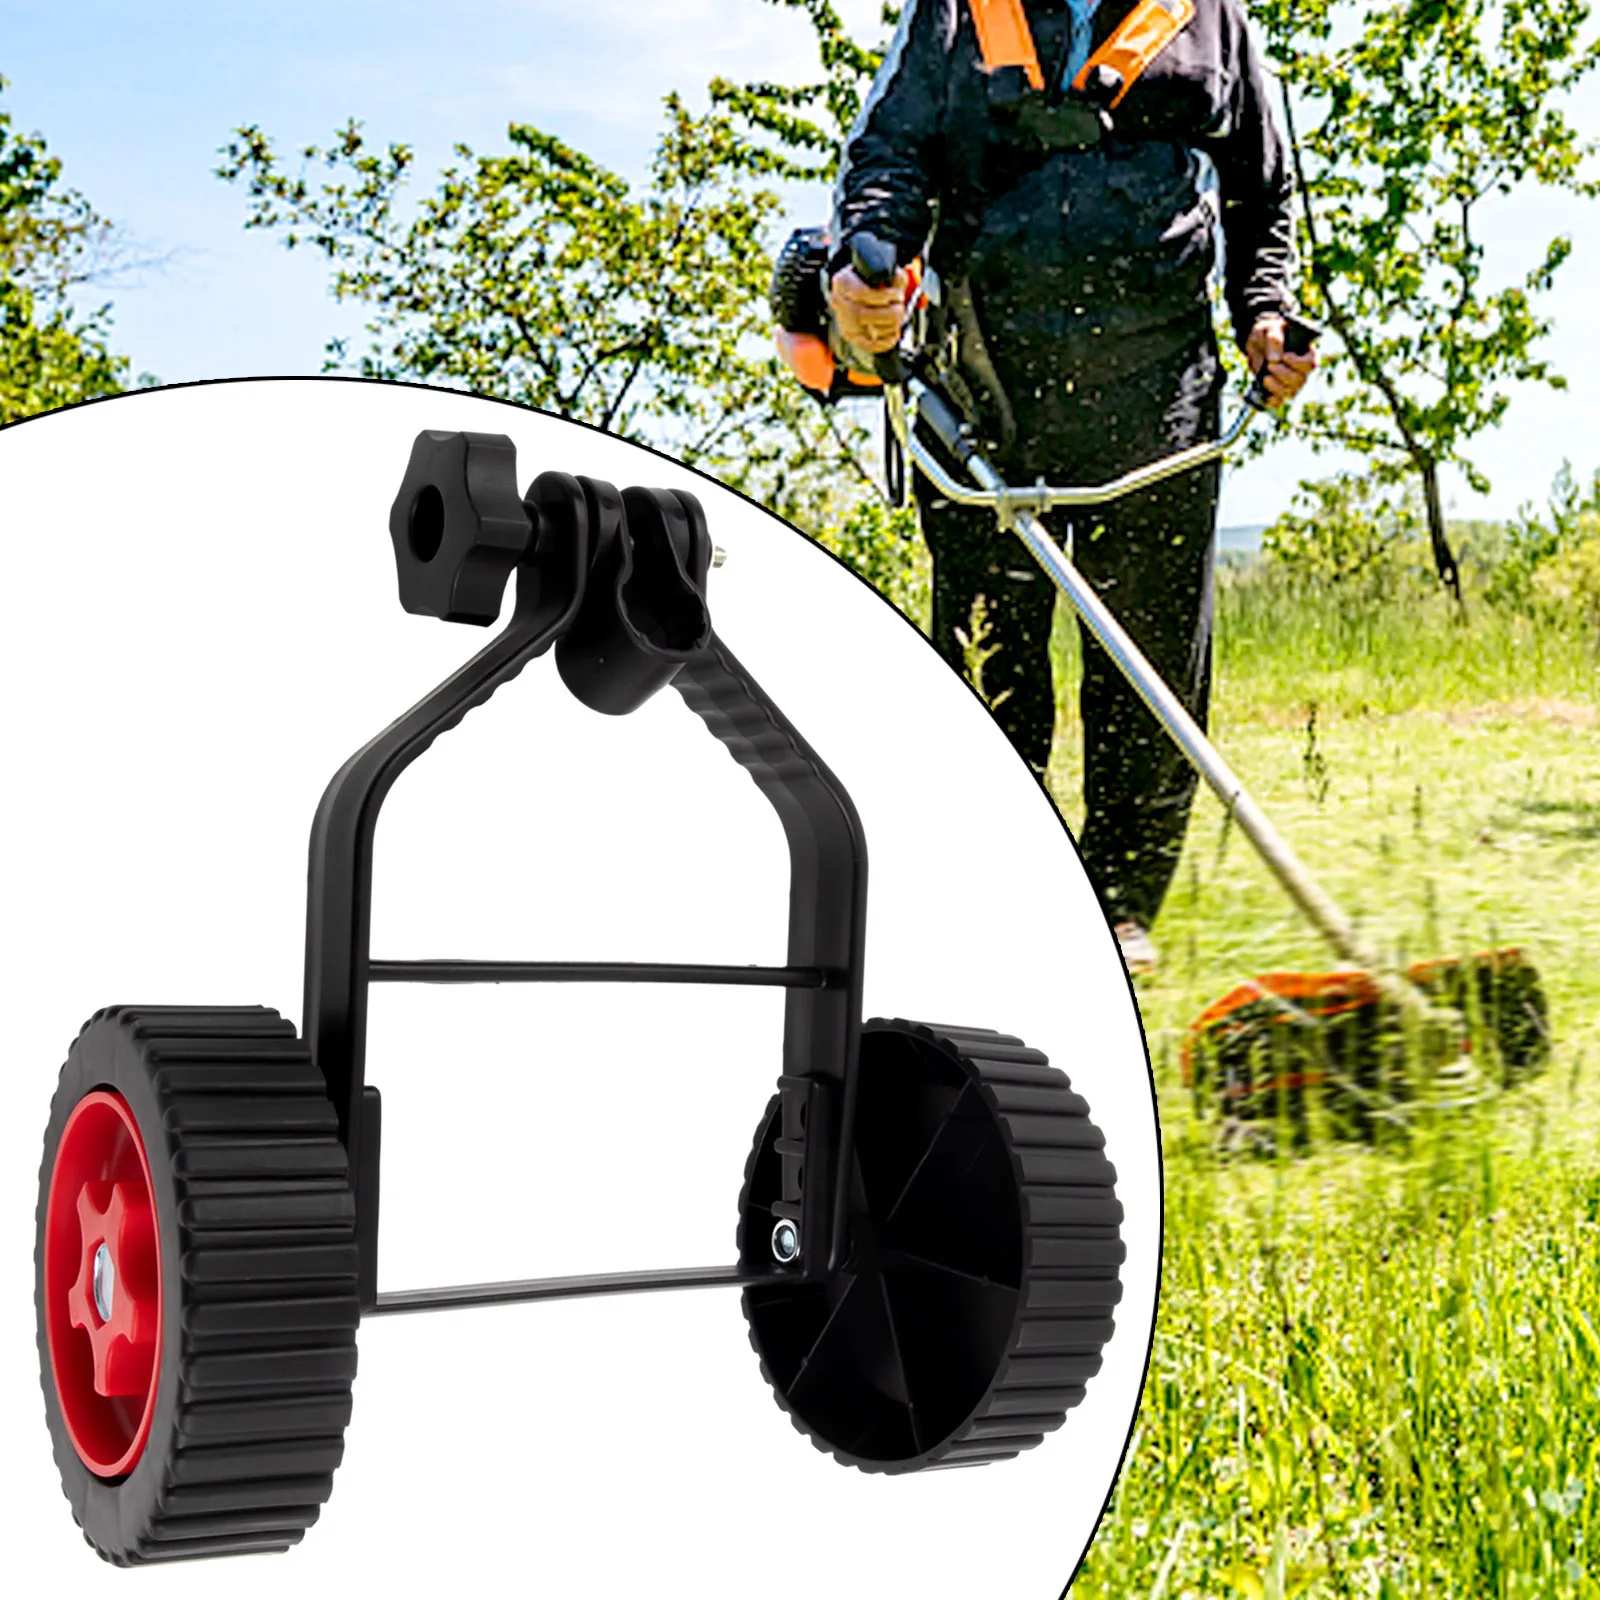 Universal String Trimmer Grass Eater Cutter Adjustable Support Wheel Set Mower Maintenance Tools Garden Tools Parts